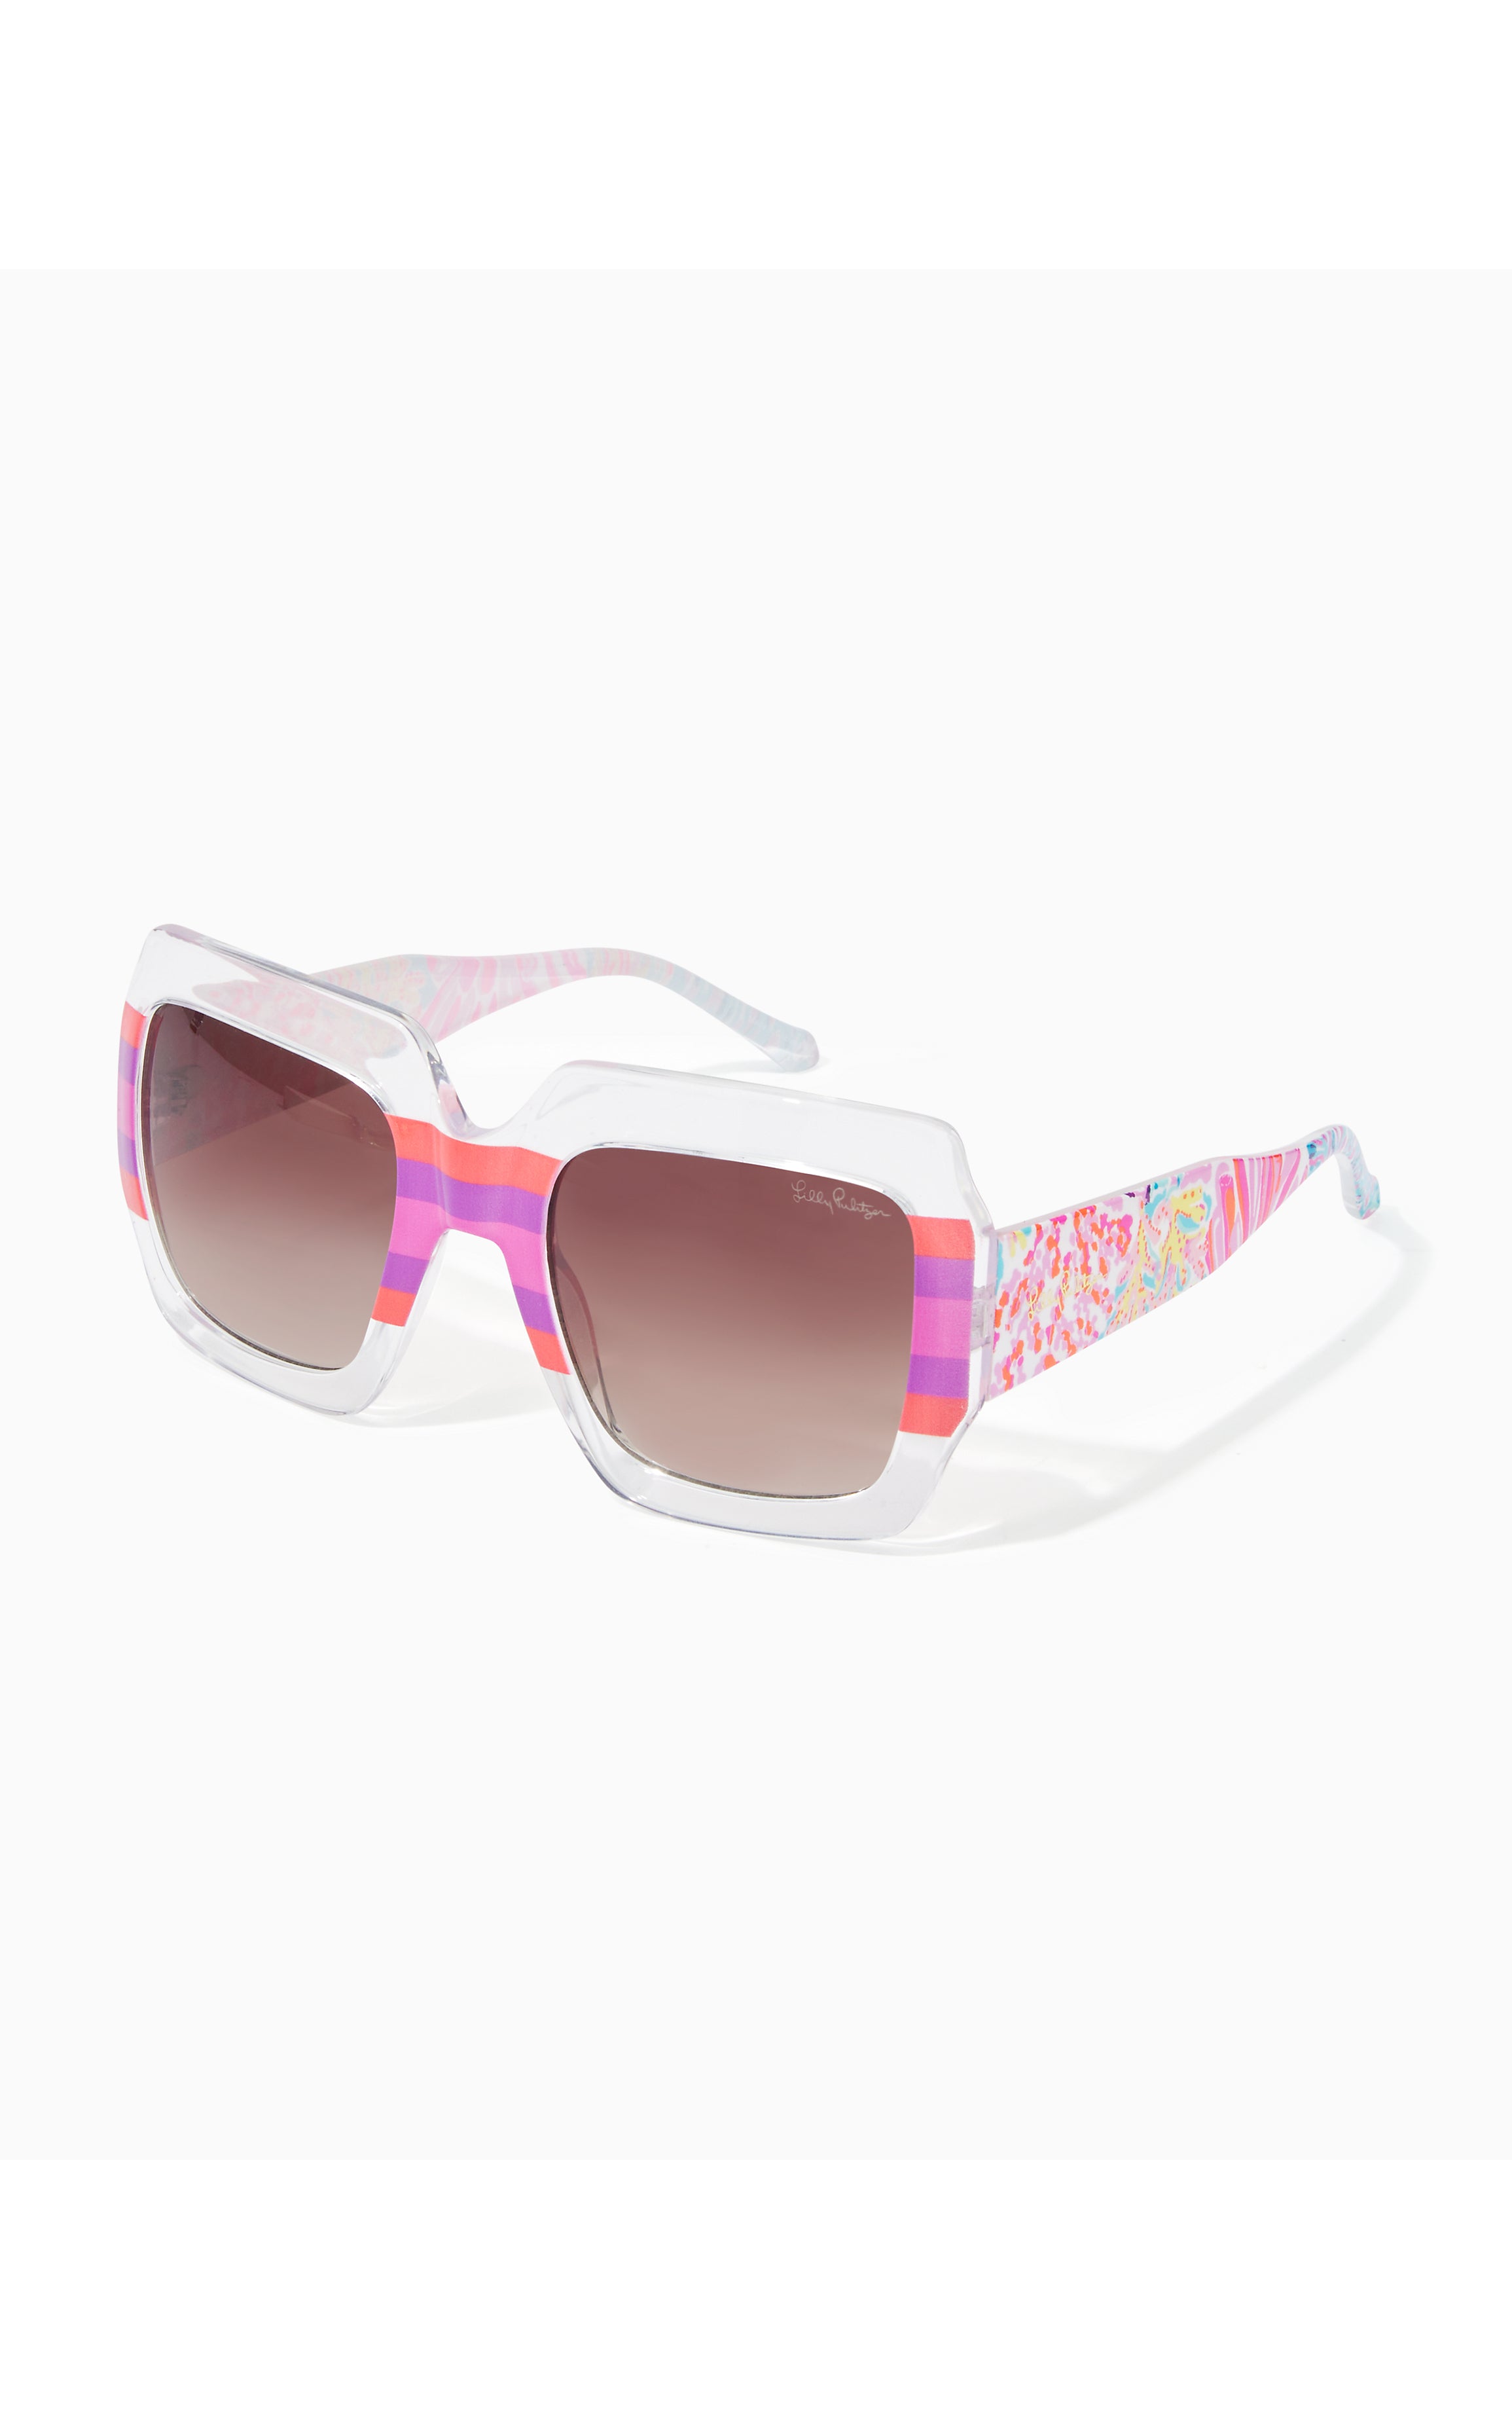 Sunglasses | Multi Splashdance